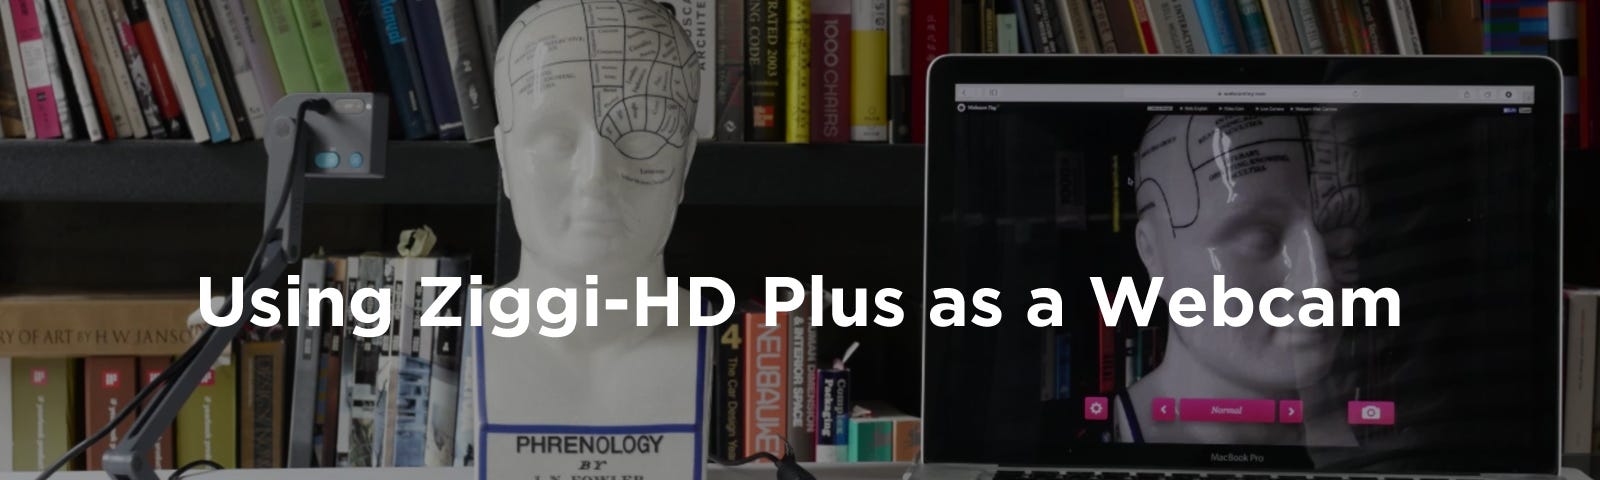 Using Ziggi-HD Plus as a Webcam